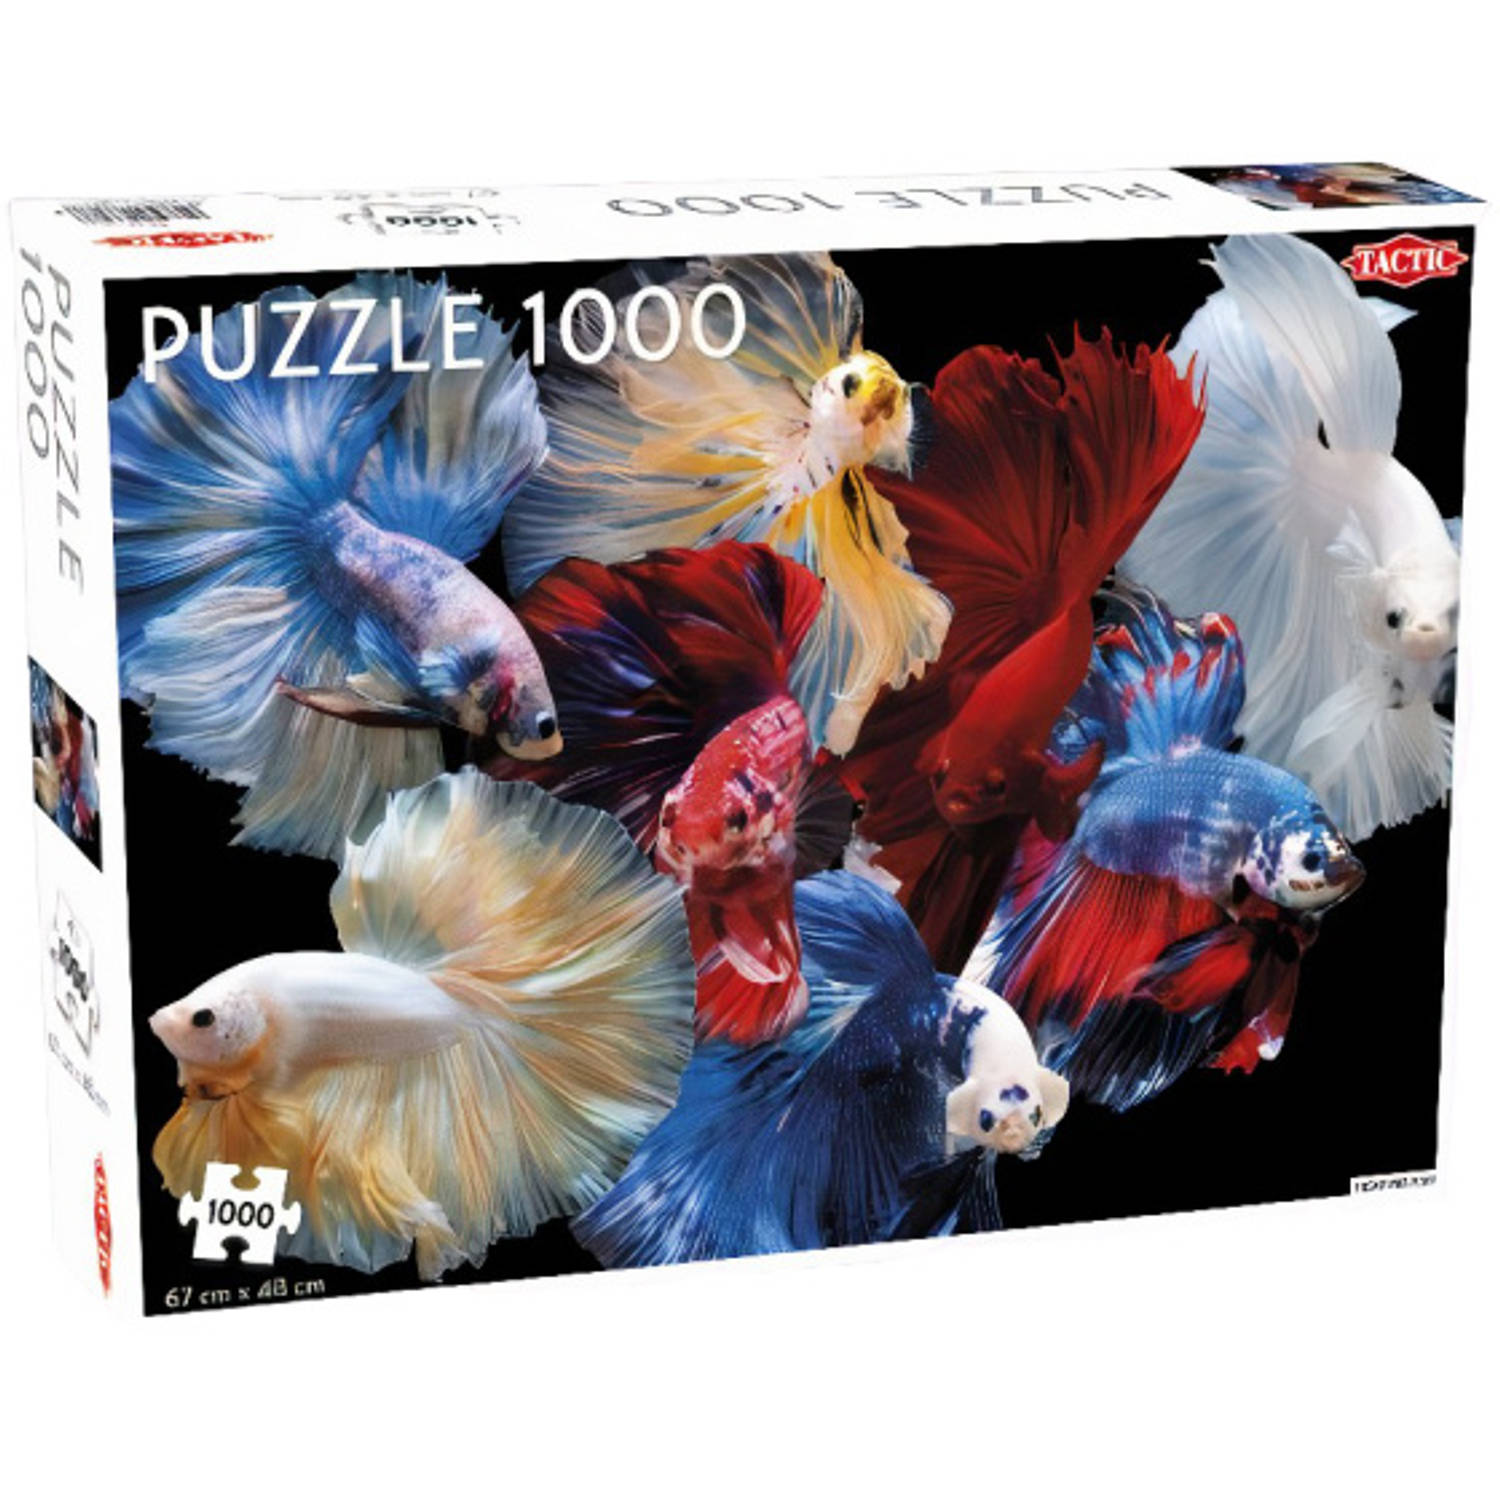 Tactic puzzel vechtvissen 67 x 48 cm 1000 stukjes